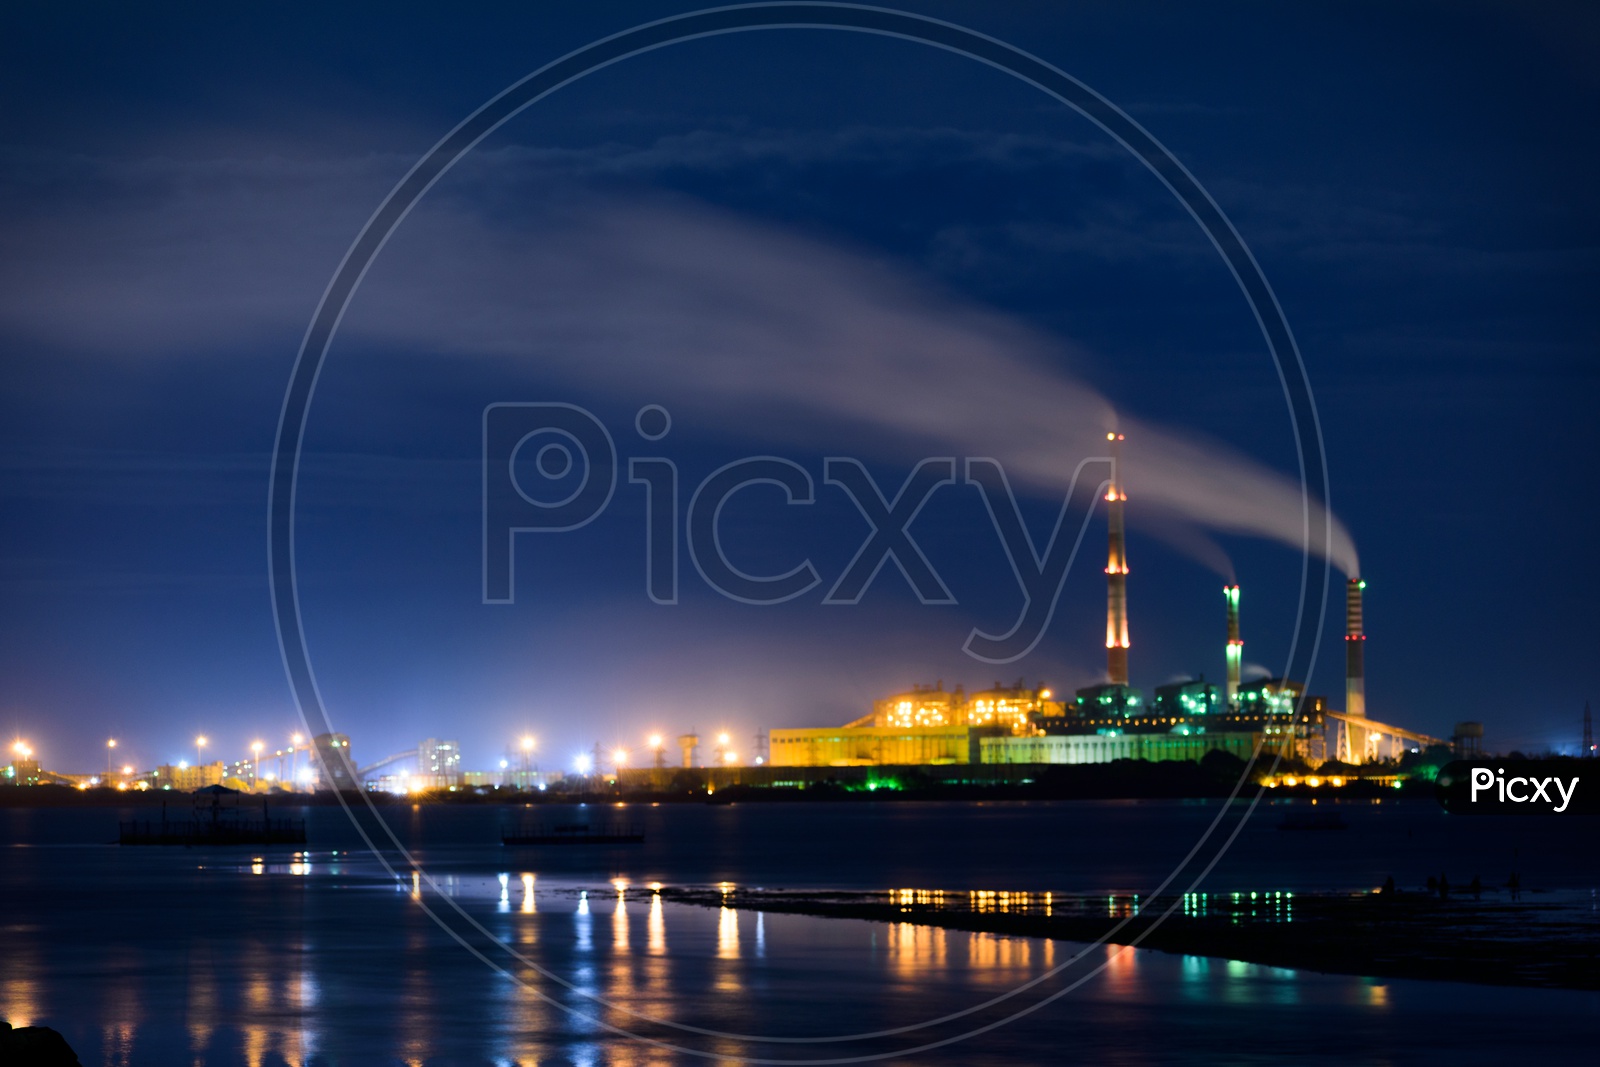 Night view of Tuticorin Thermal Power Station